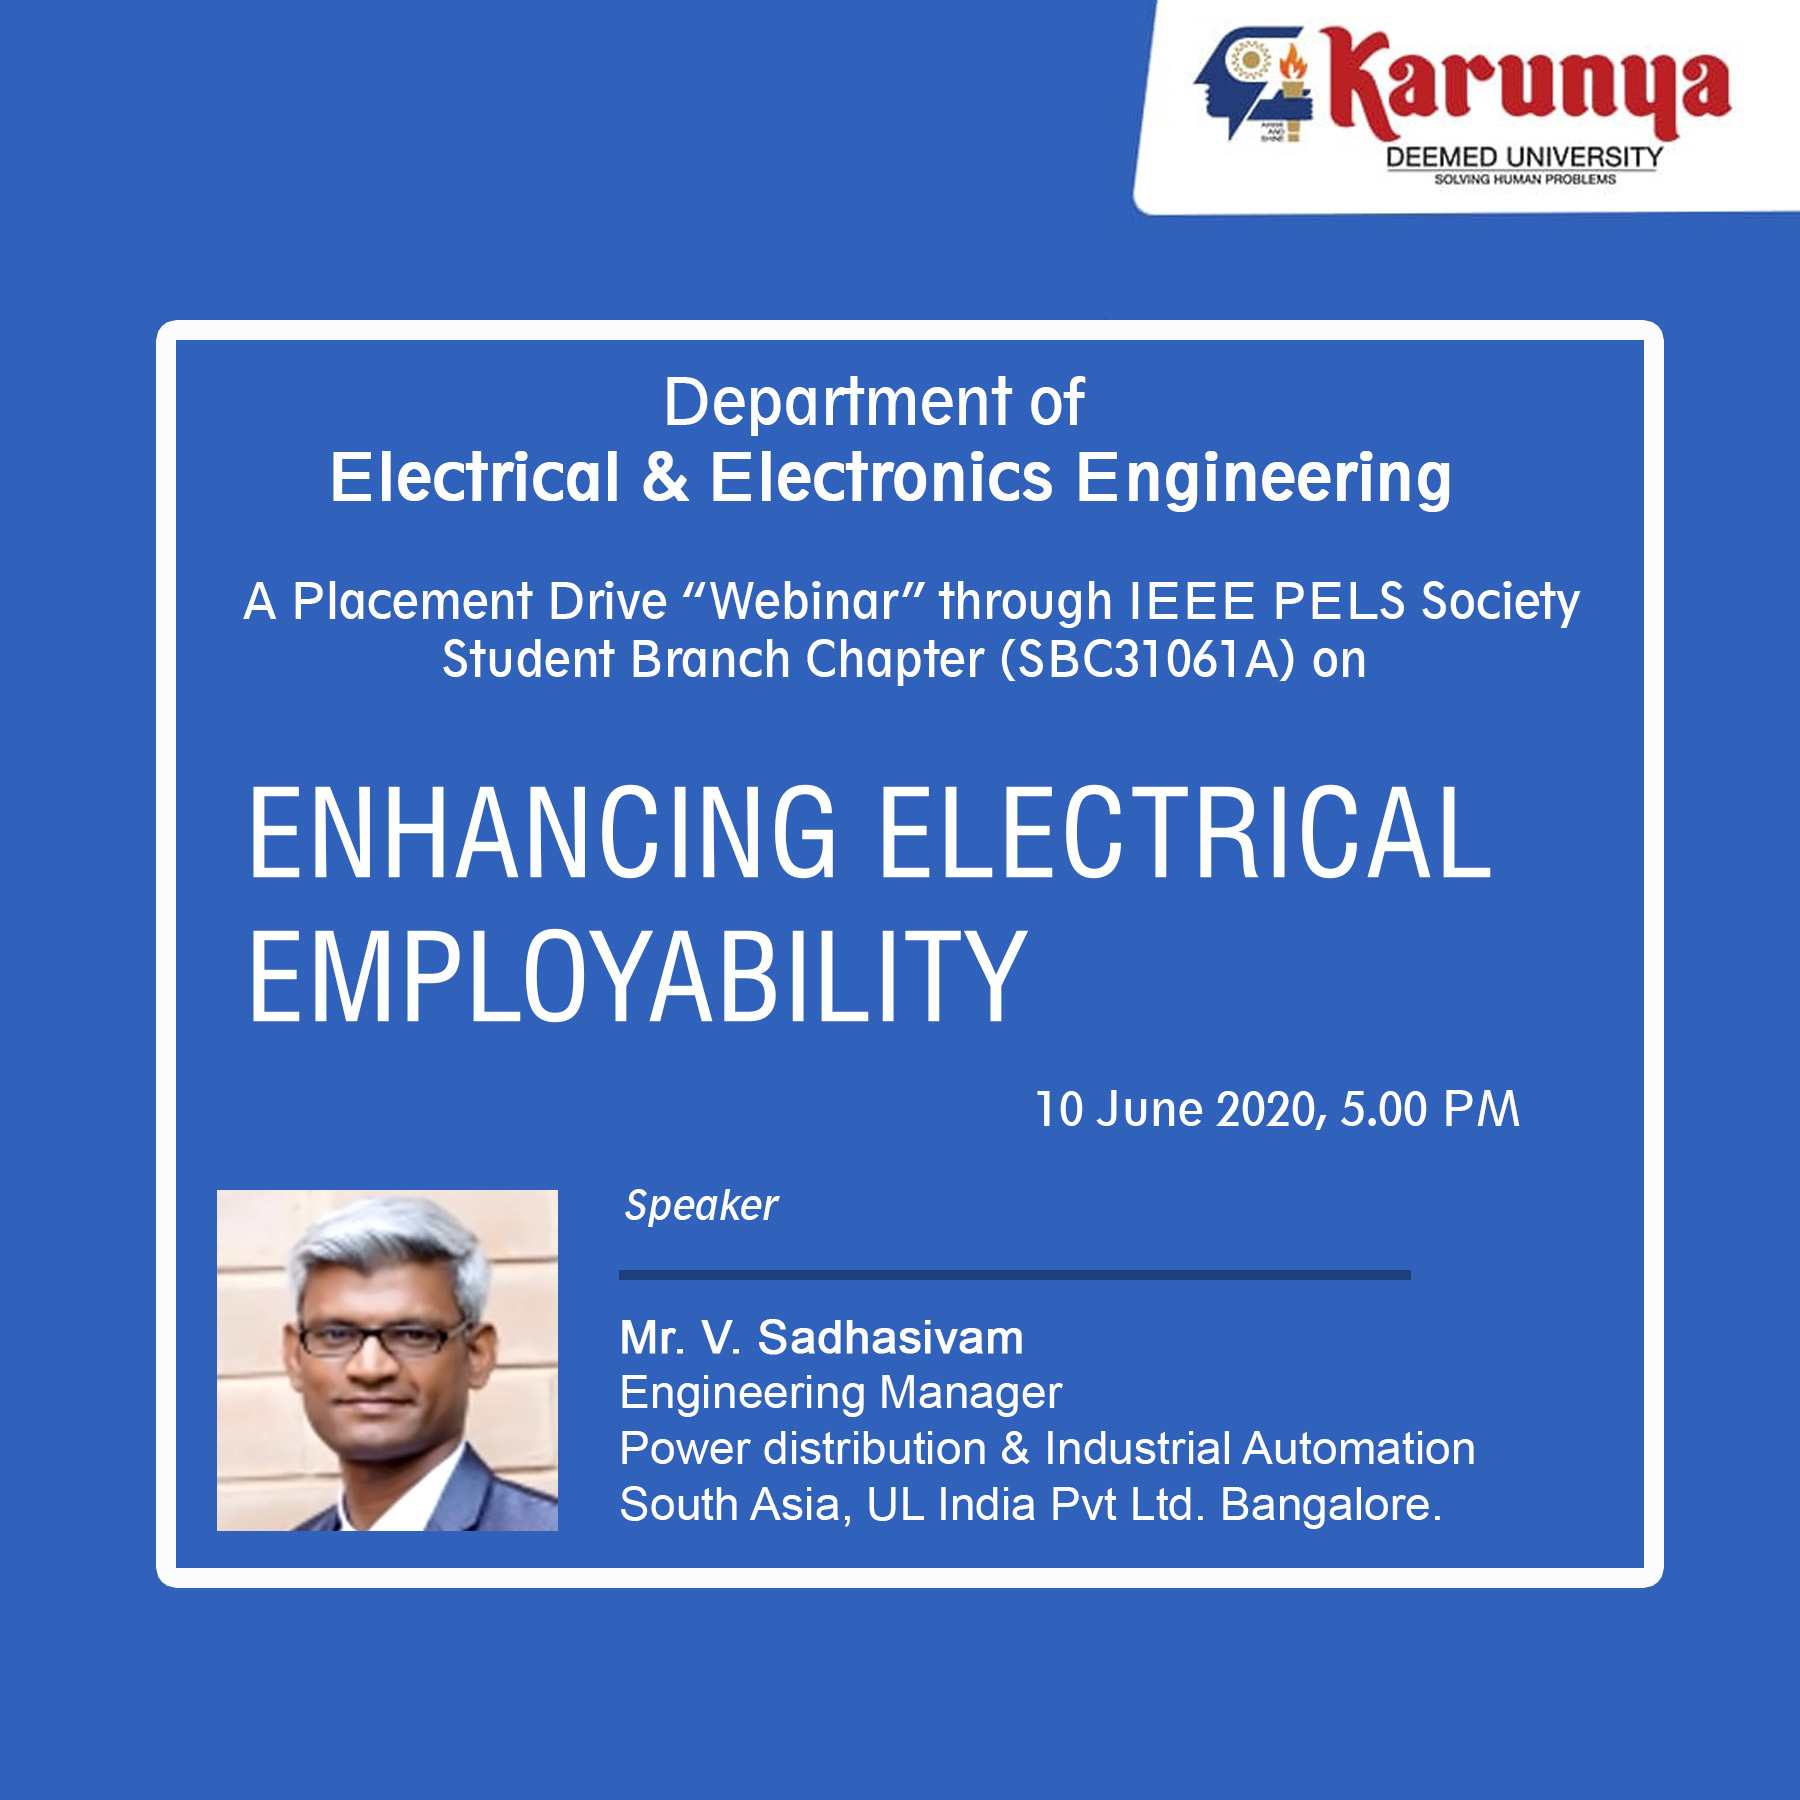 Enchancing Electrical Employability